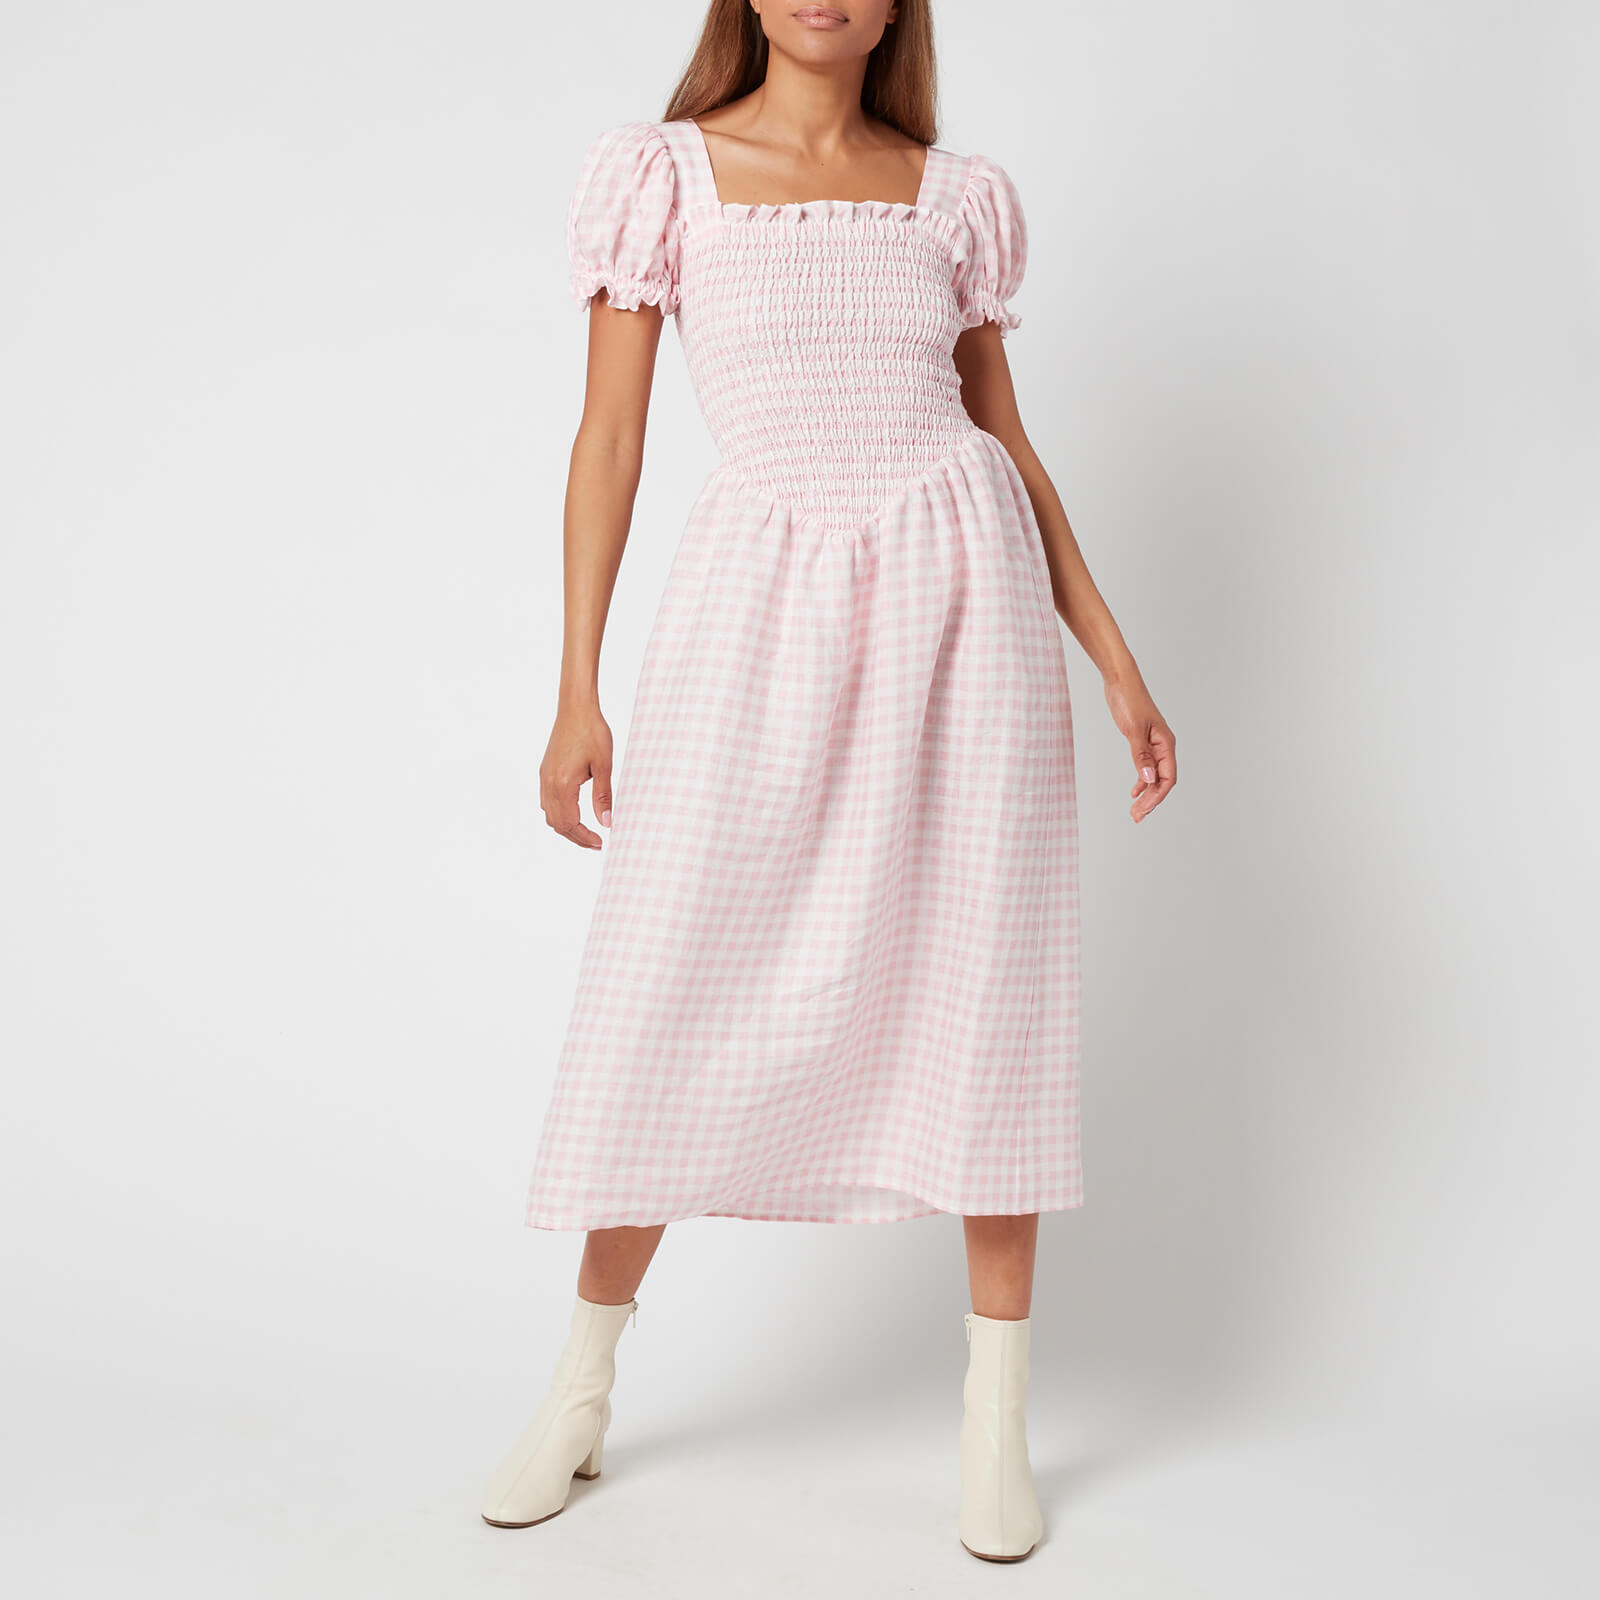 Sleeper Women's Belle Linen Dress - Pink & White - XS